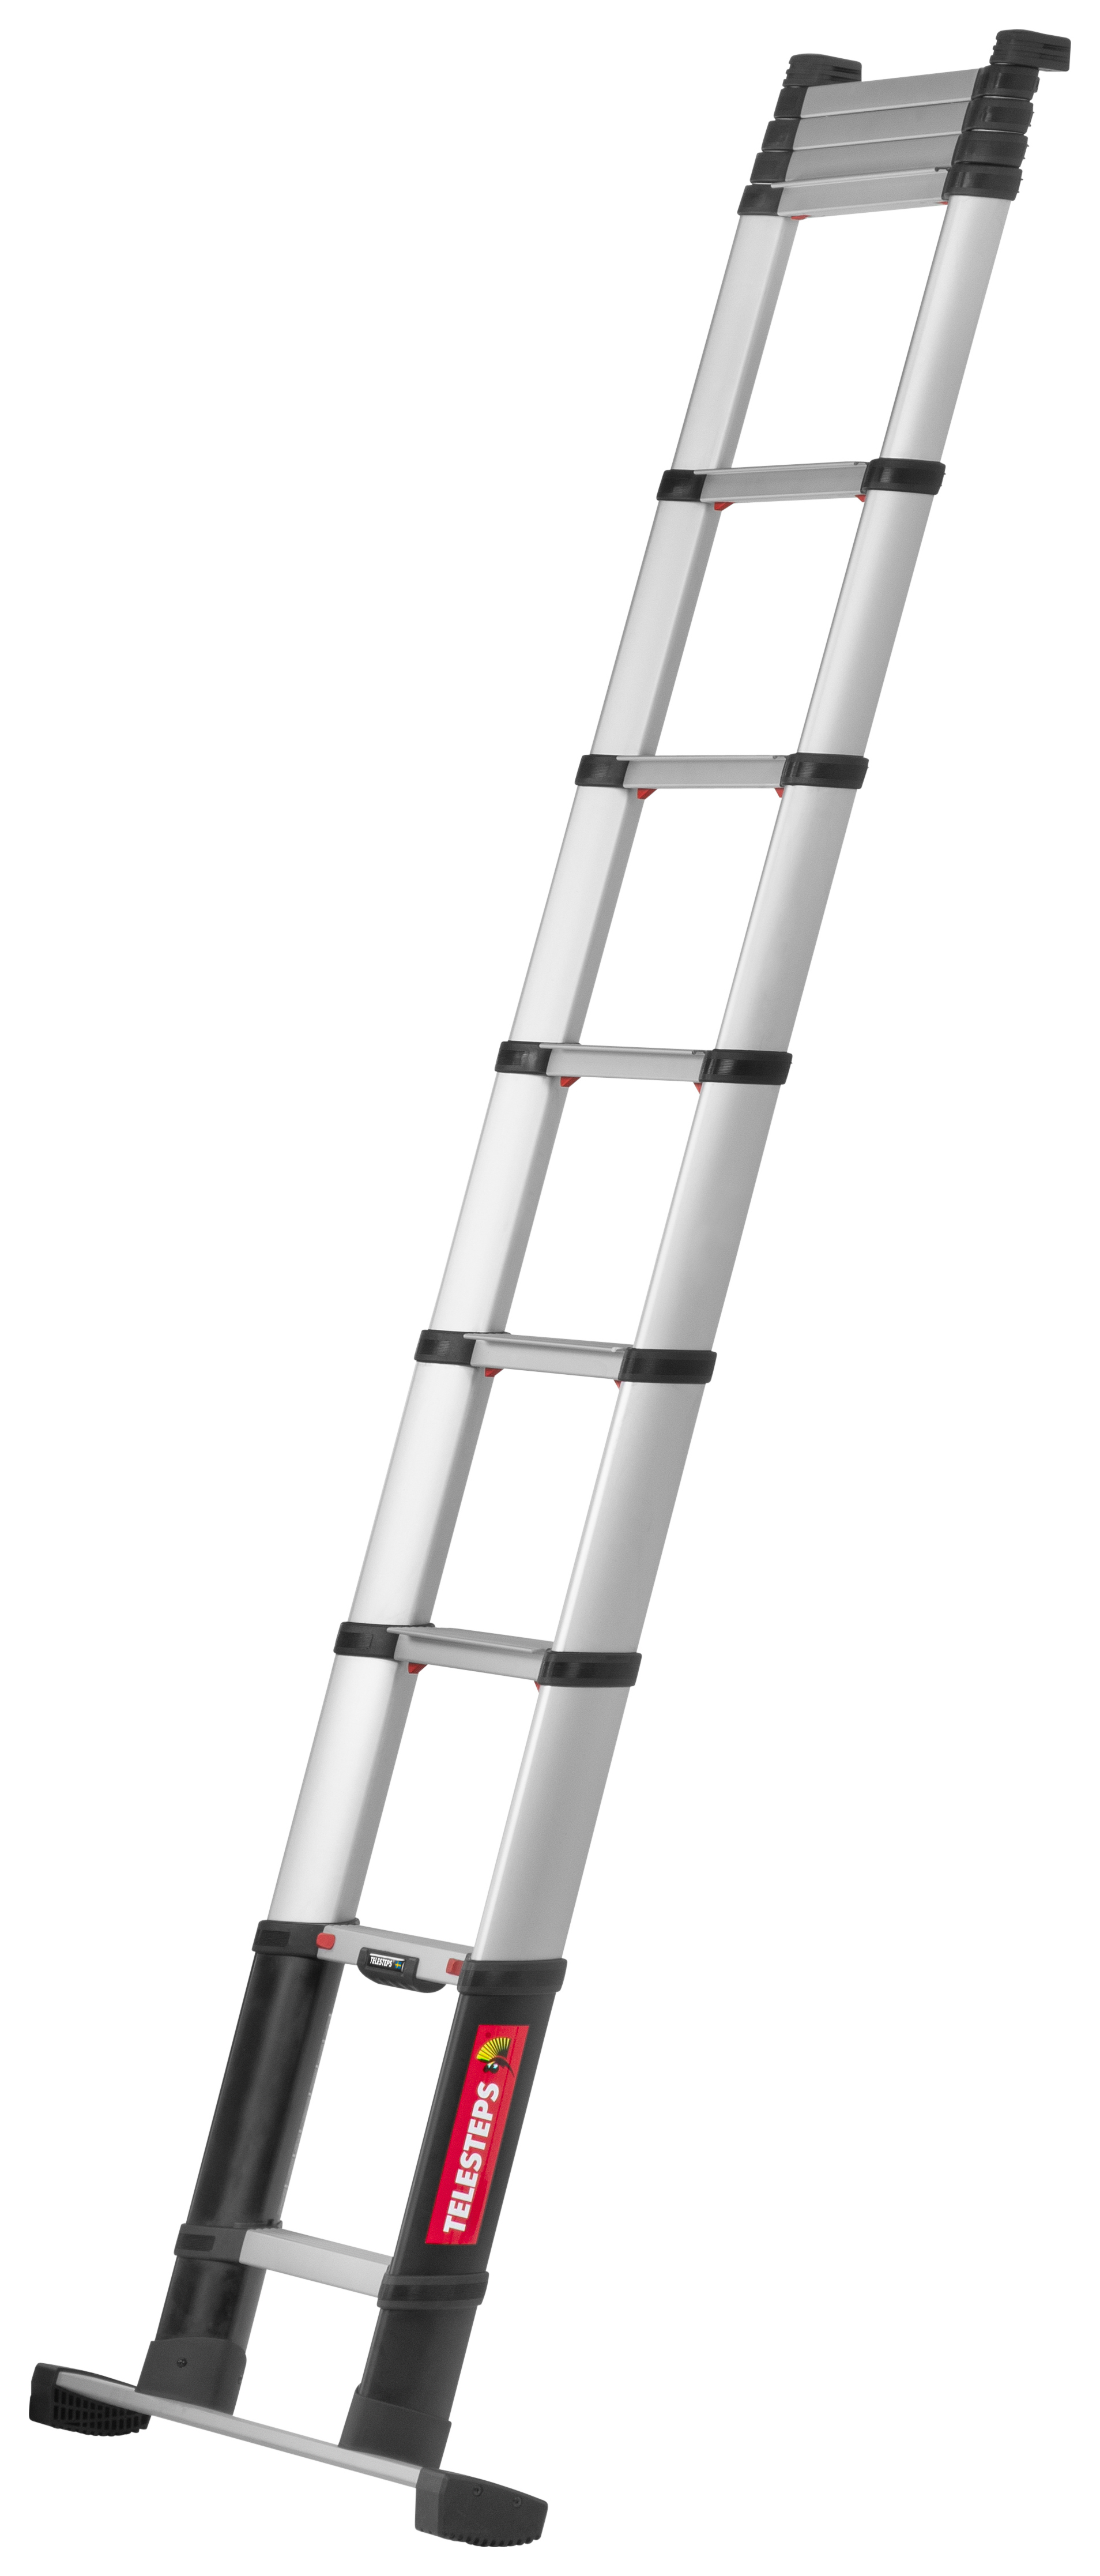 Telesteps Prime Line 3.5m Aluminium Telescopic Ladder with Stabiliser Bar - Max Height 4.3m